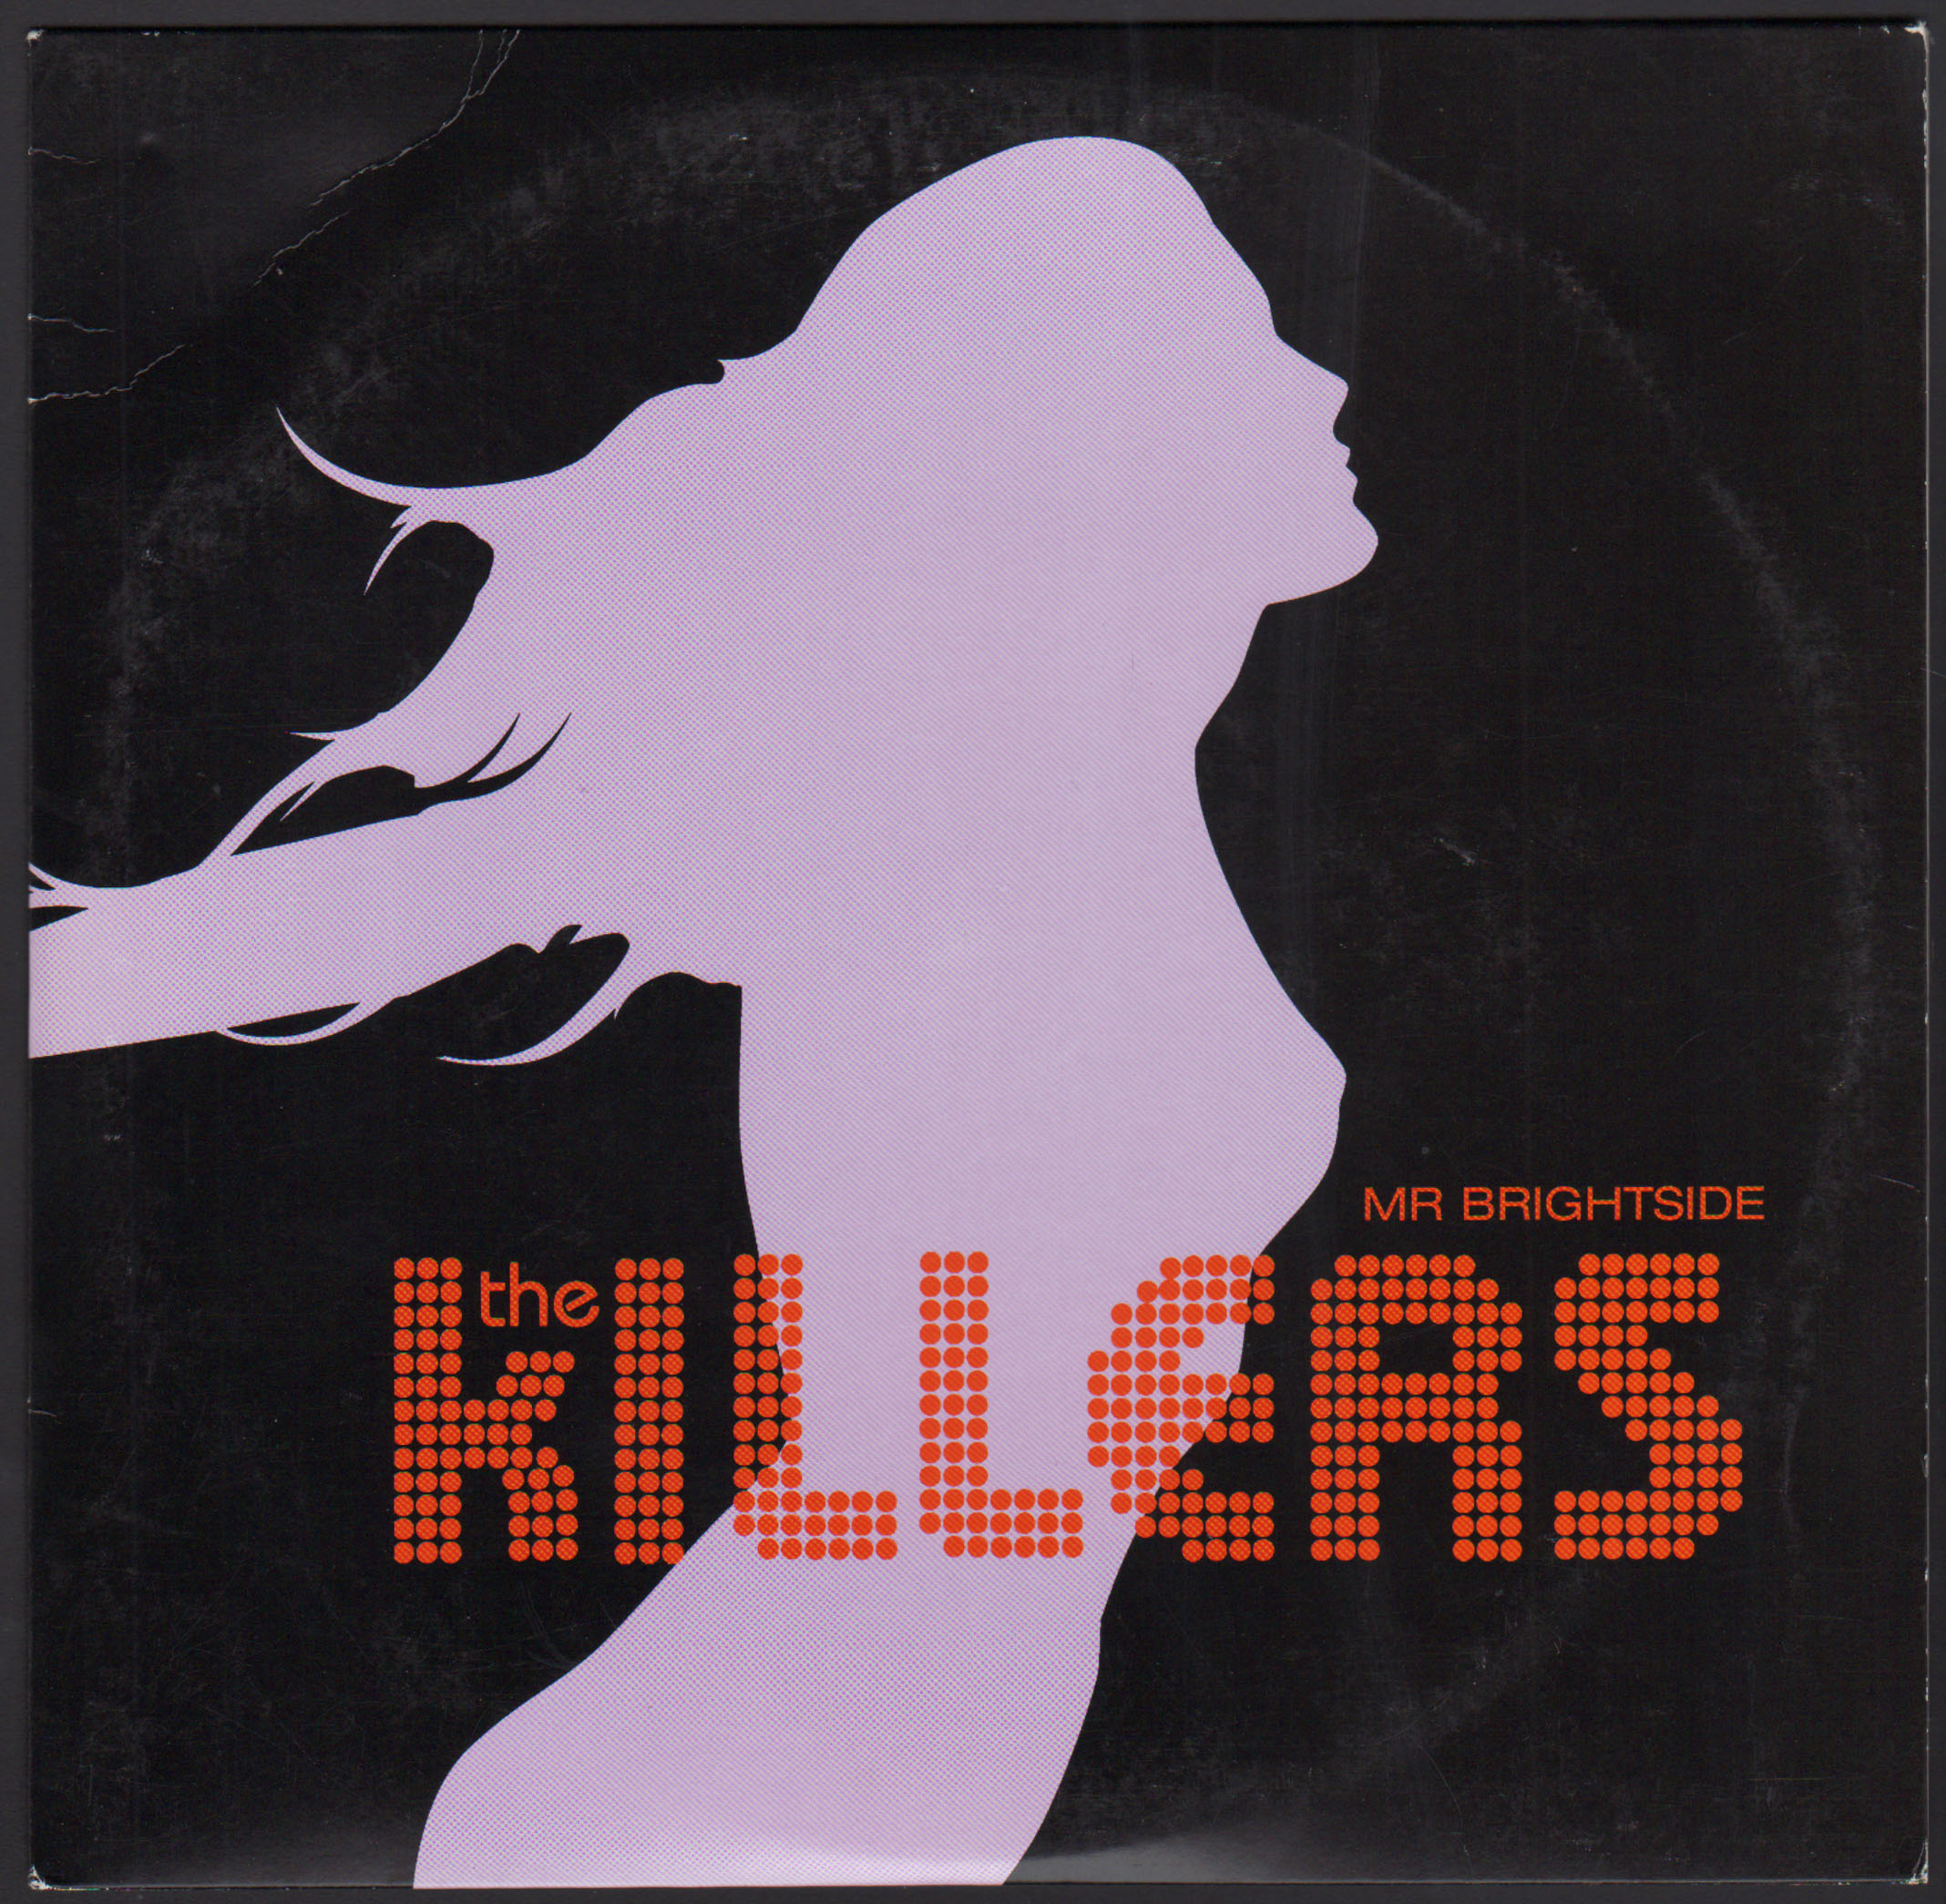 Killers обложка. The Killers обложка. The Killers альбомы. The Killers обложки альбомов. The Killers Mr Brightside.